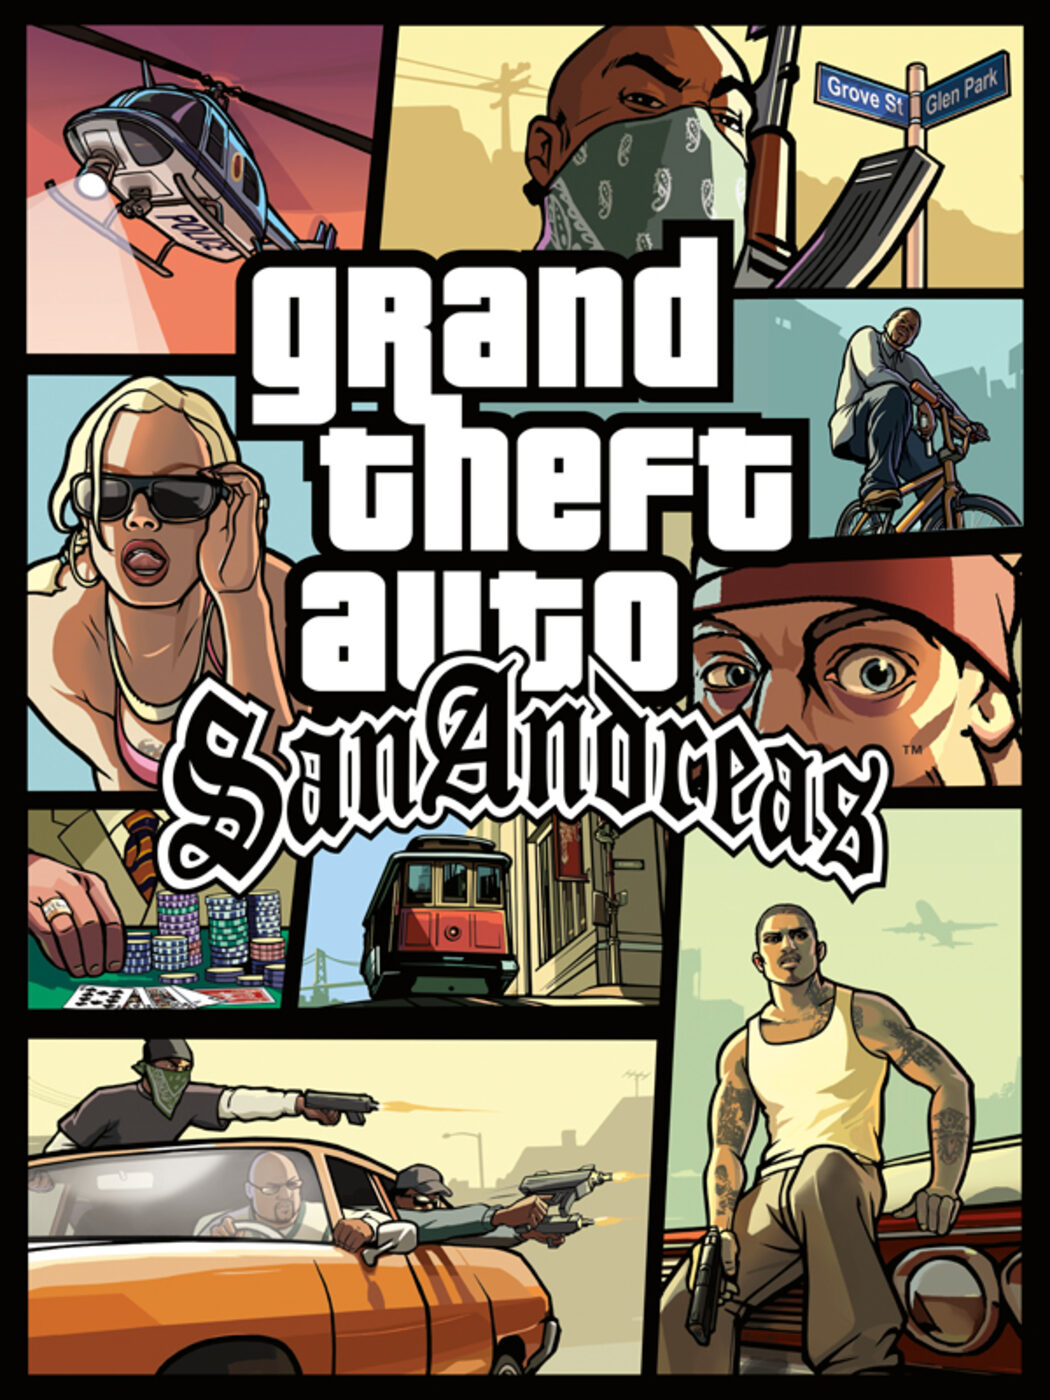 GTA San Andreas: requisitos mínimos e recomendados no PC